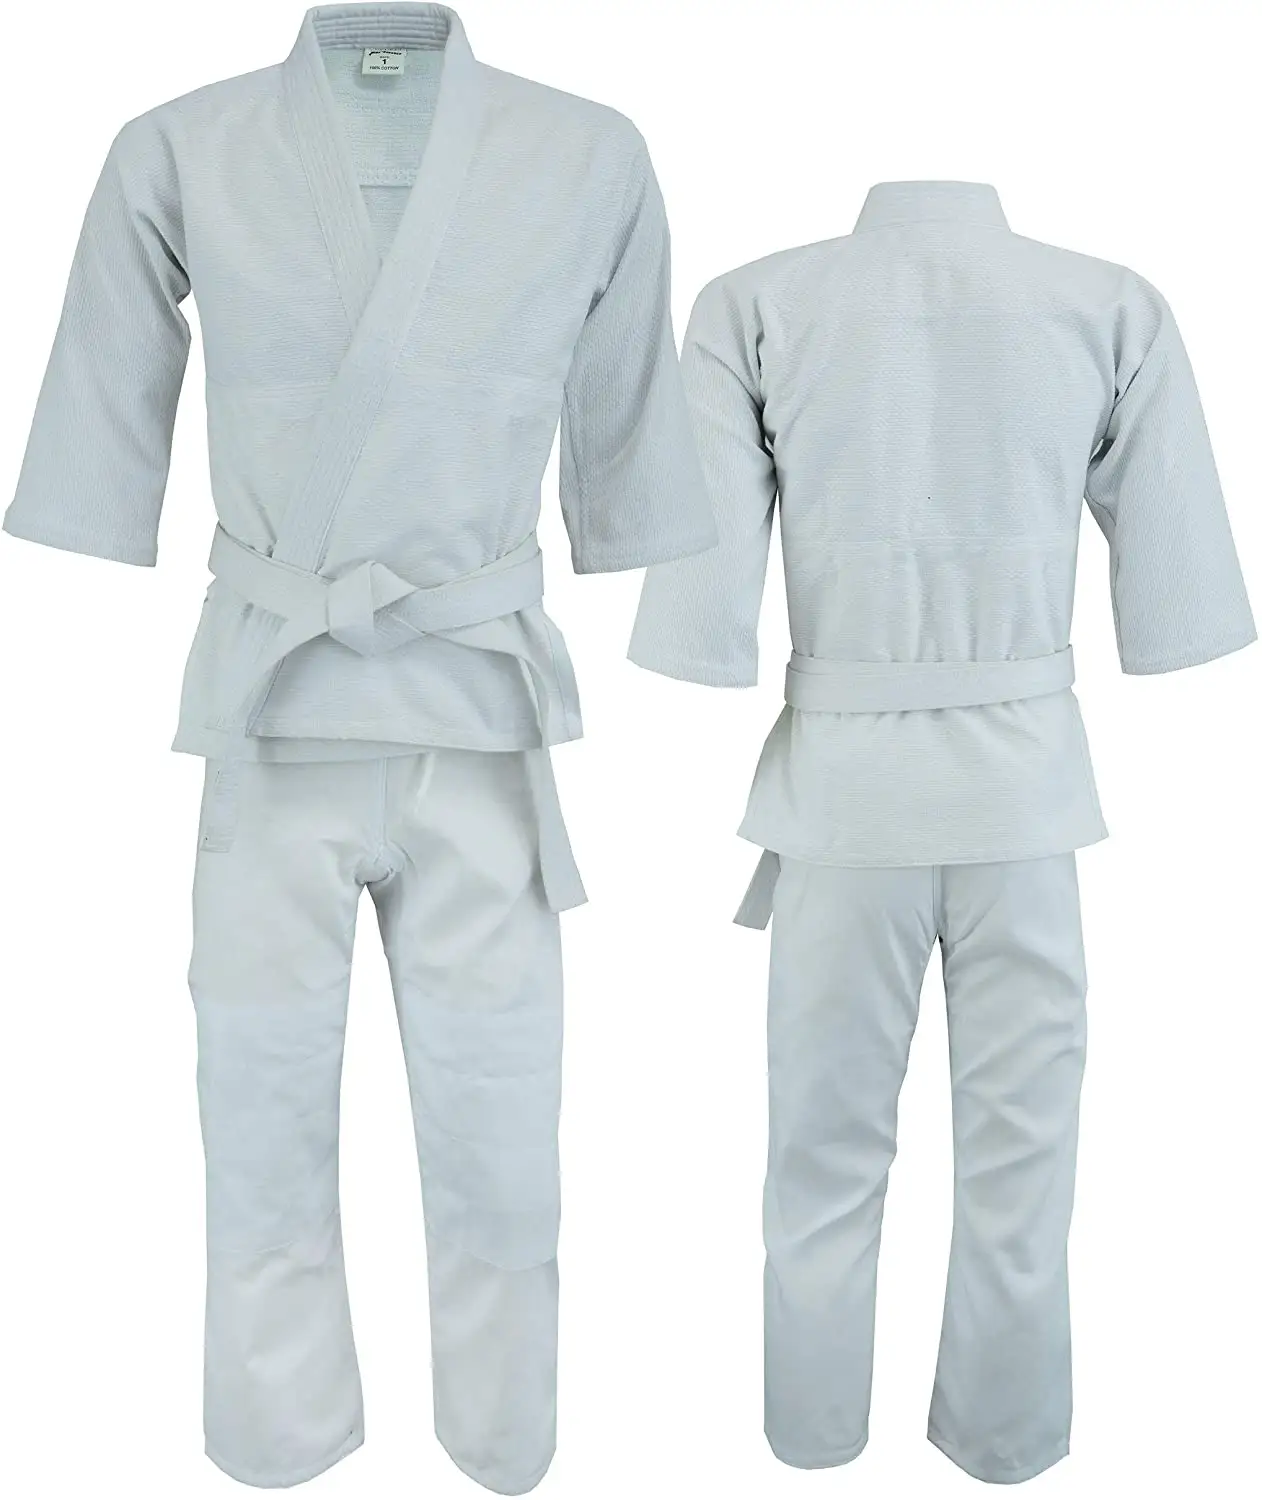 Judo Gi Uniforms Sample Free Shipping Martial Arts Wear Martial Arts Uniform Judo Gi Kimono 100% Cotton White 450g Judo Suit